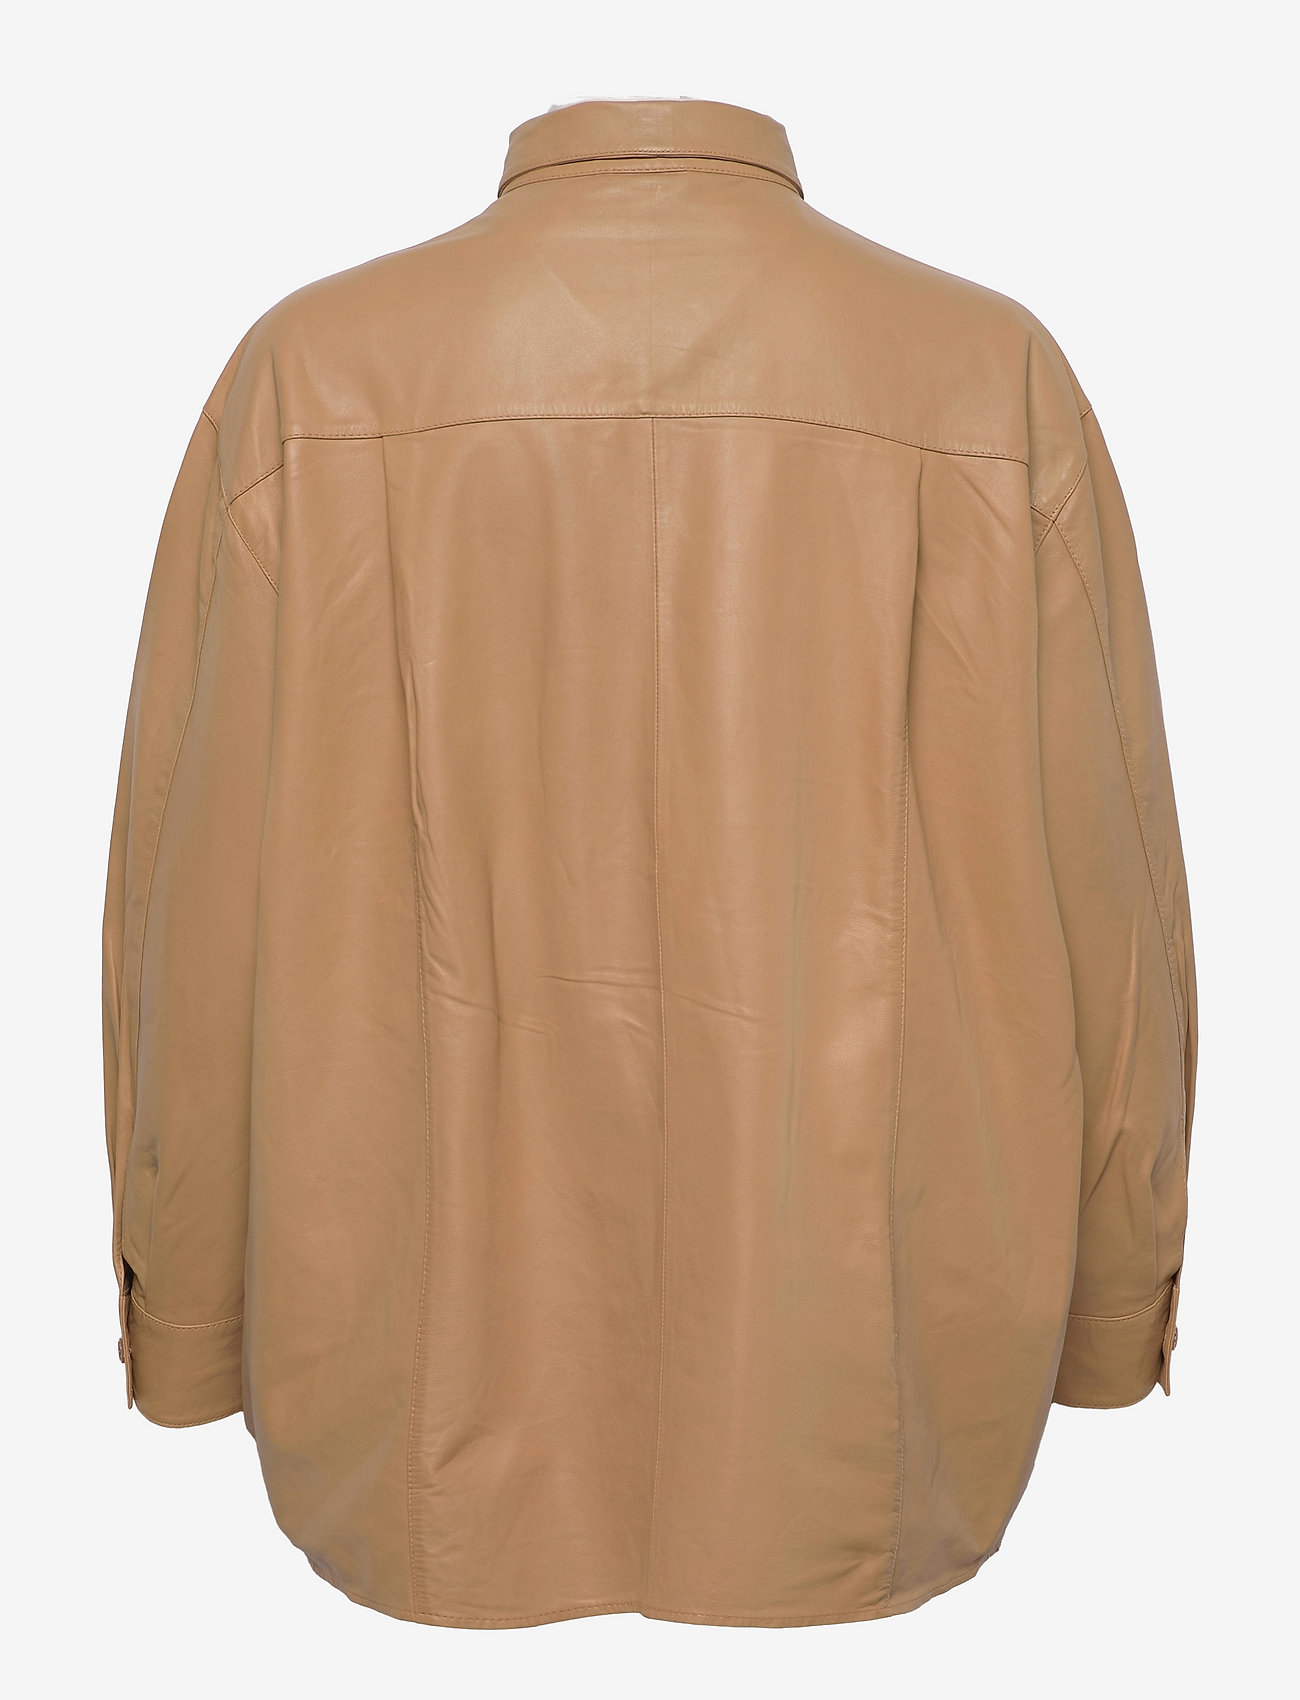 MDK / Munderingskompagniet - Agnes thin leather shirt - overshirts - tan - 1